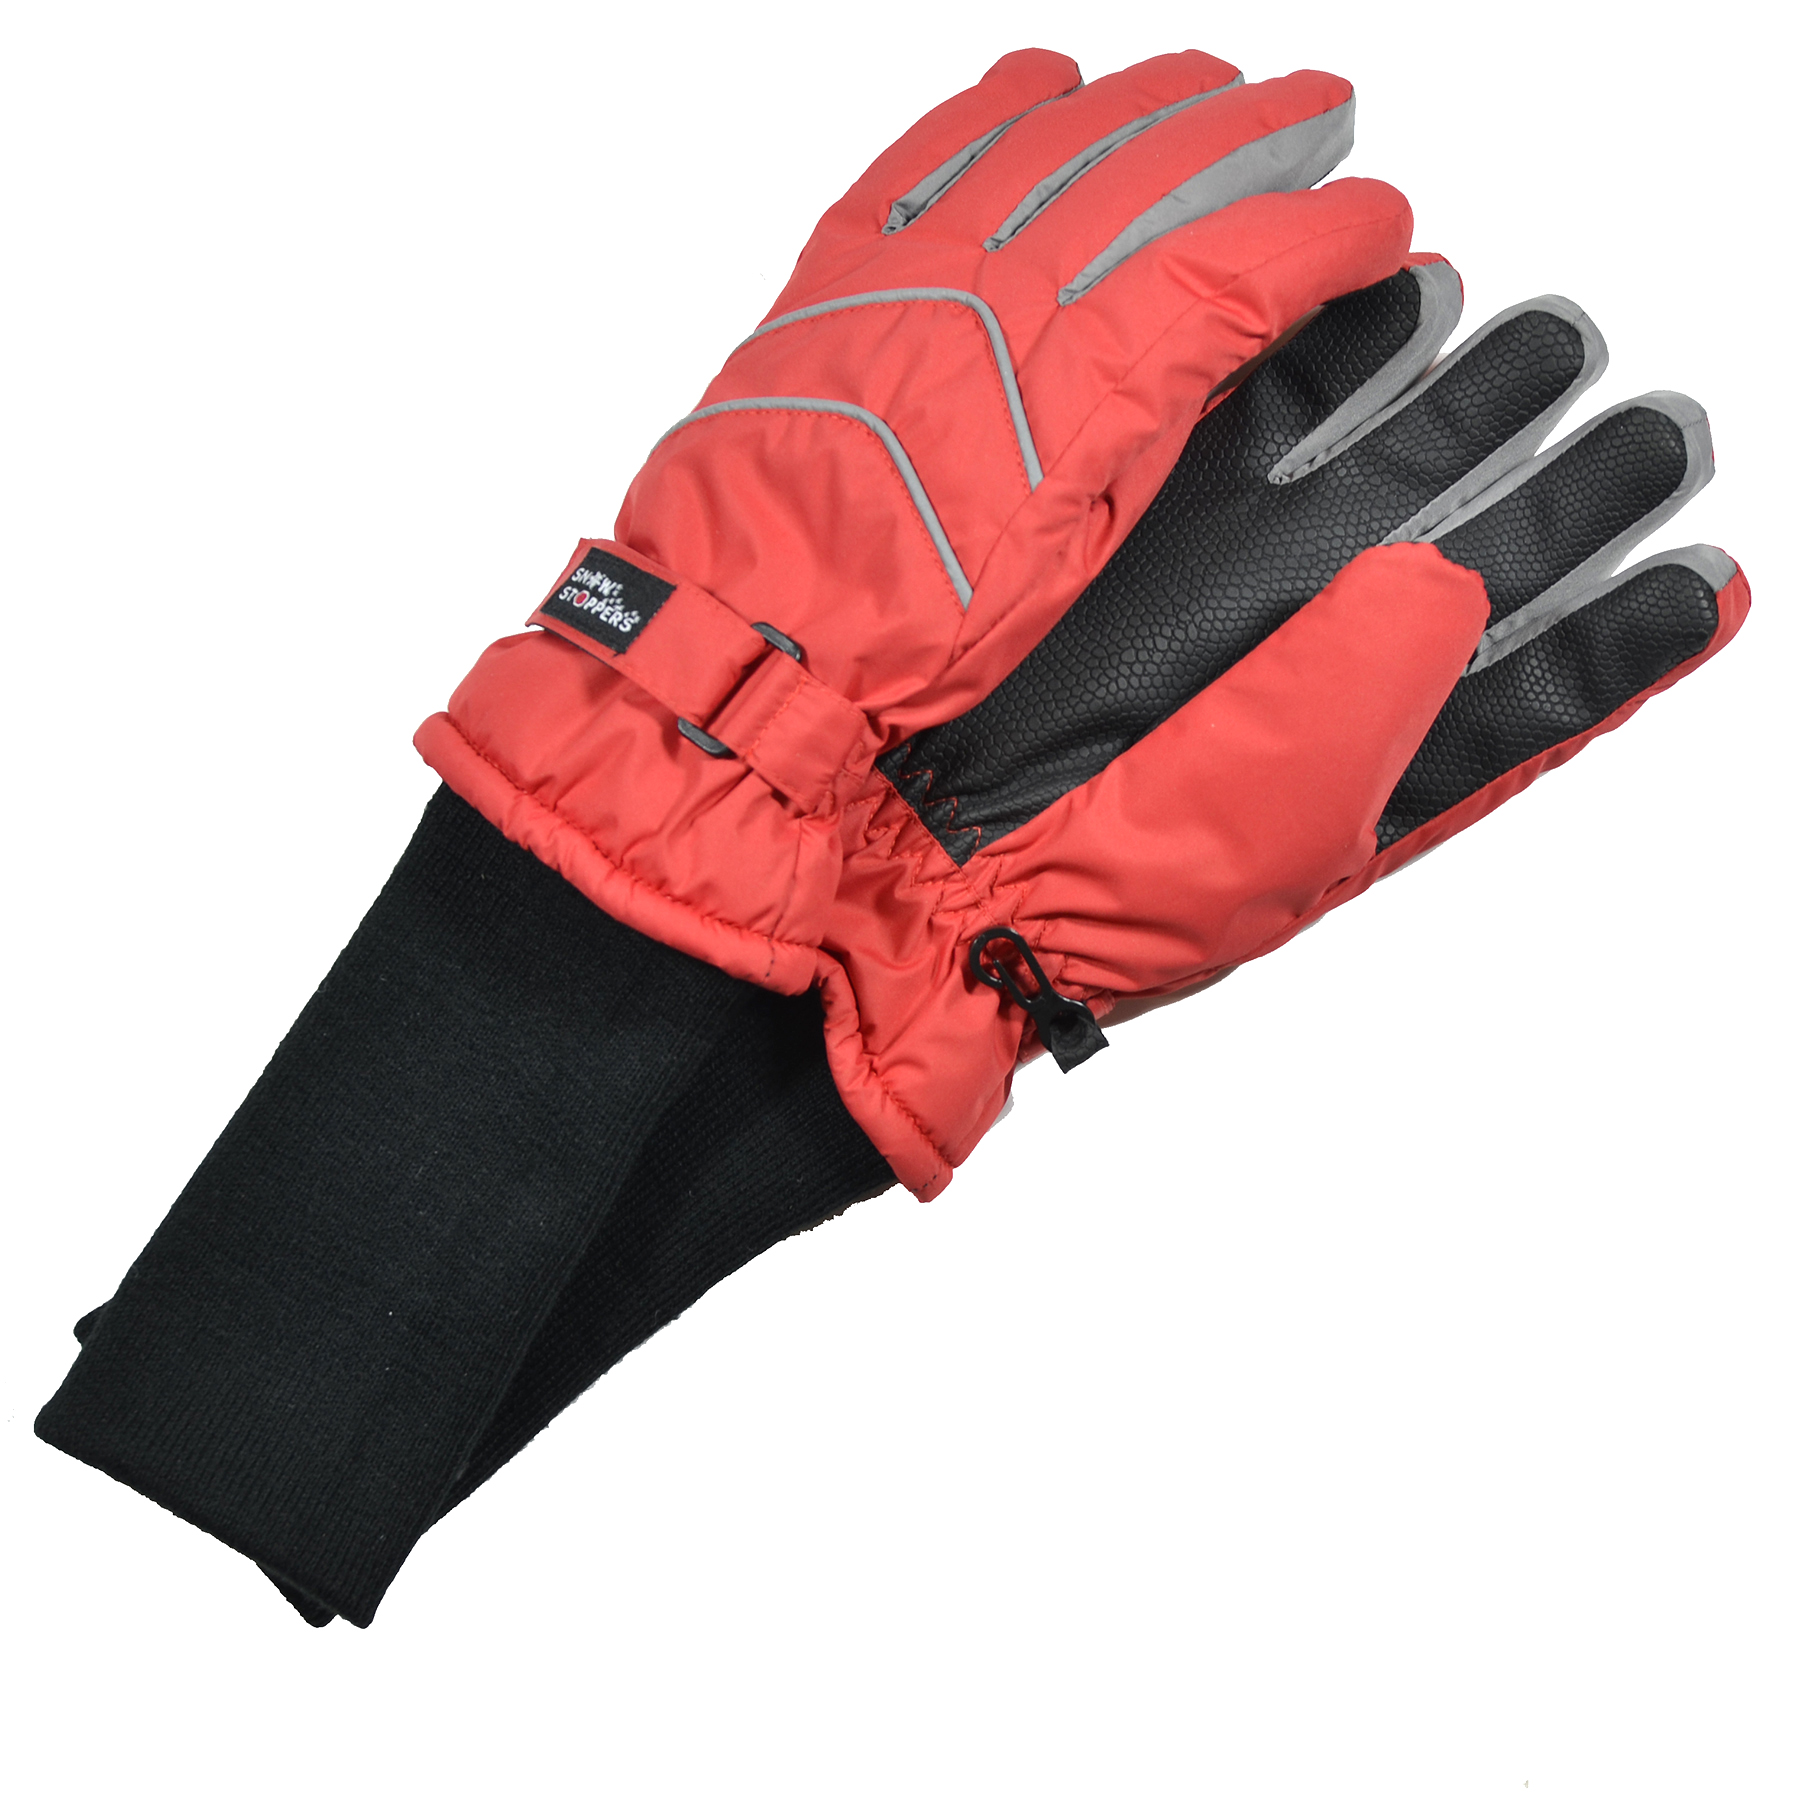 Red Winter Gloves